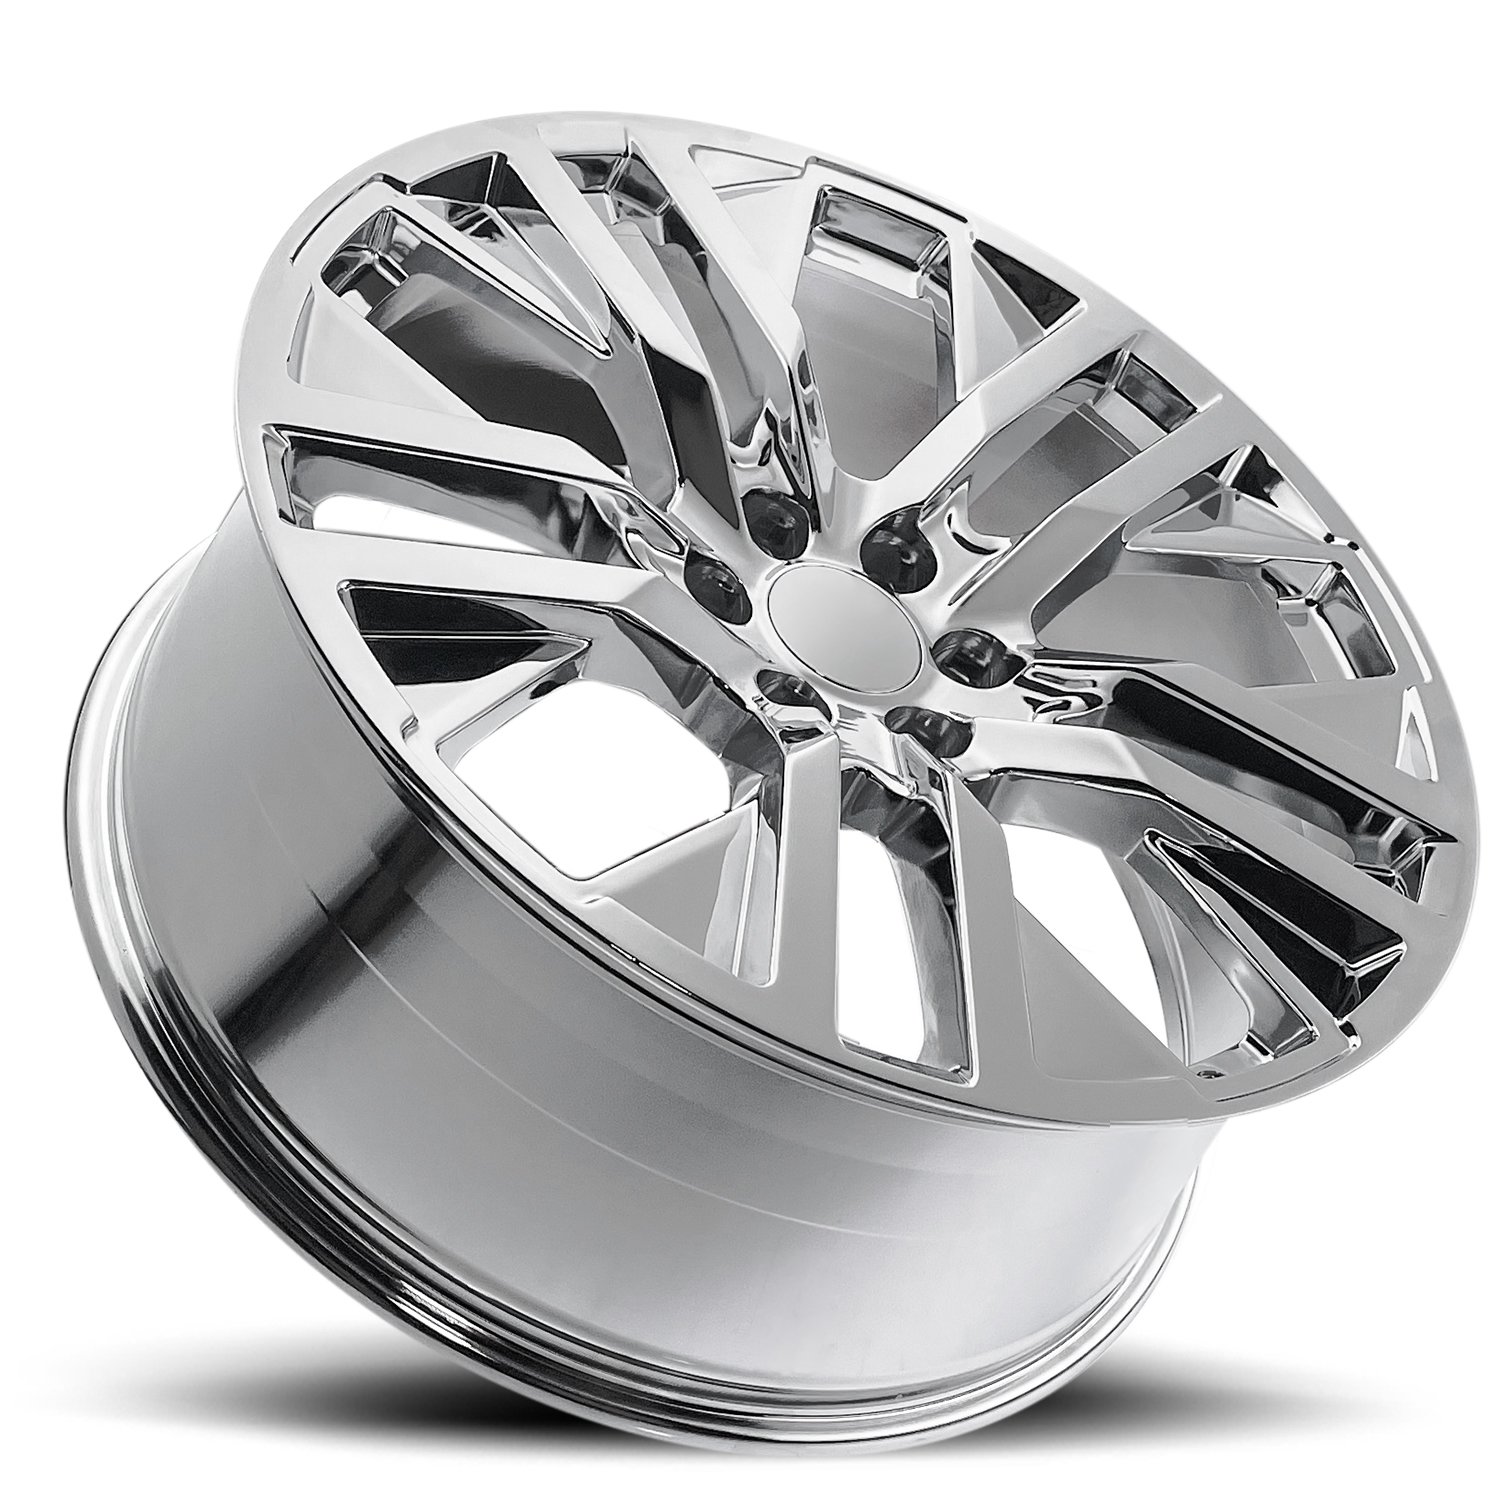 FR96-2410-6lug-Chrome-01-GMC-CarbonPro-factory-reproductions-wheels-rims-lay